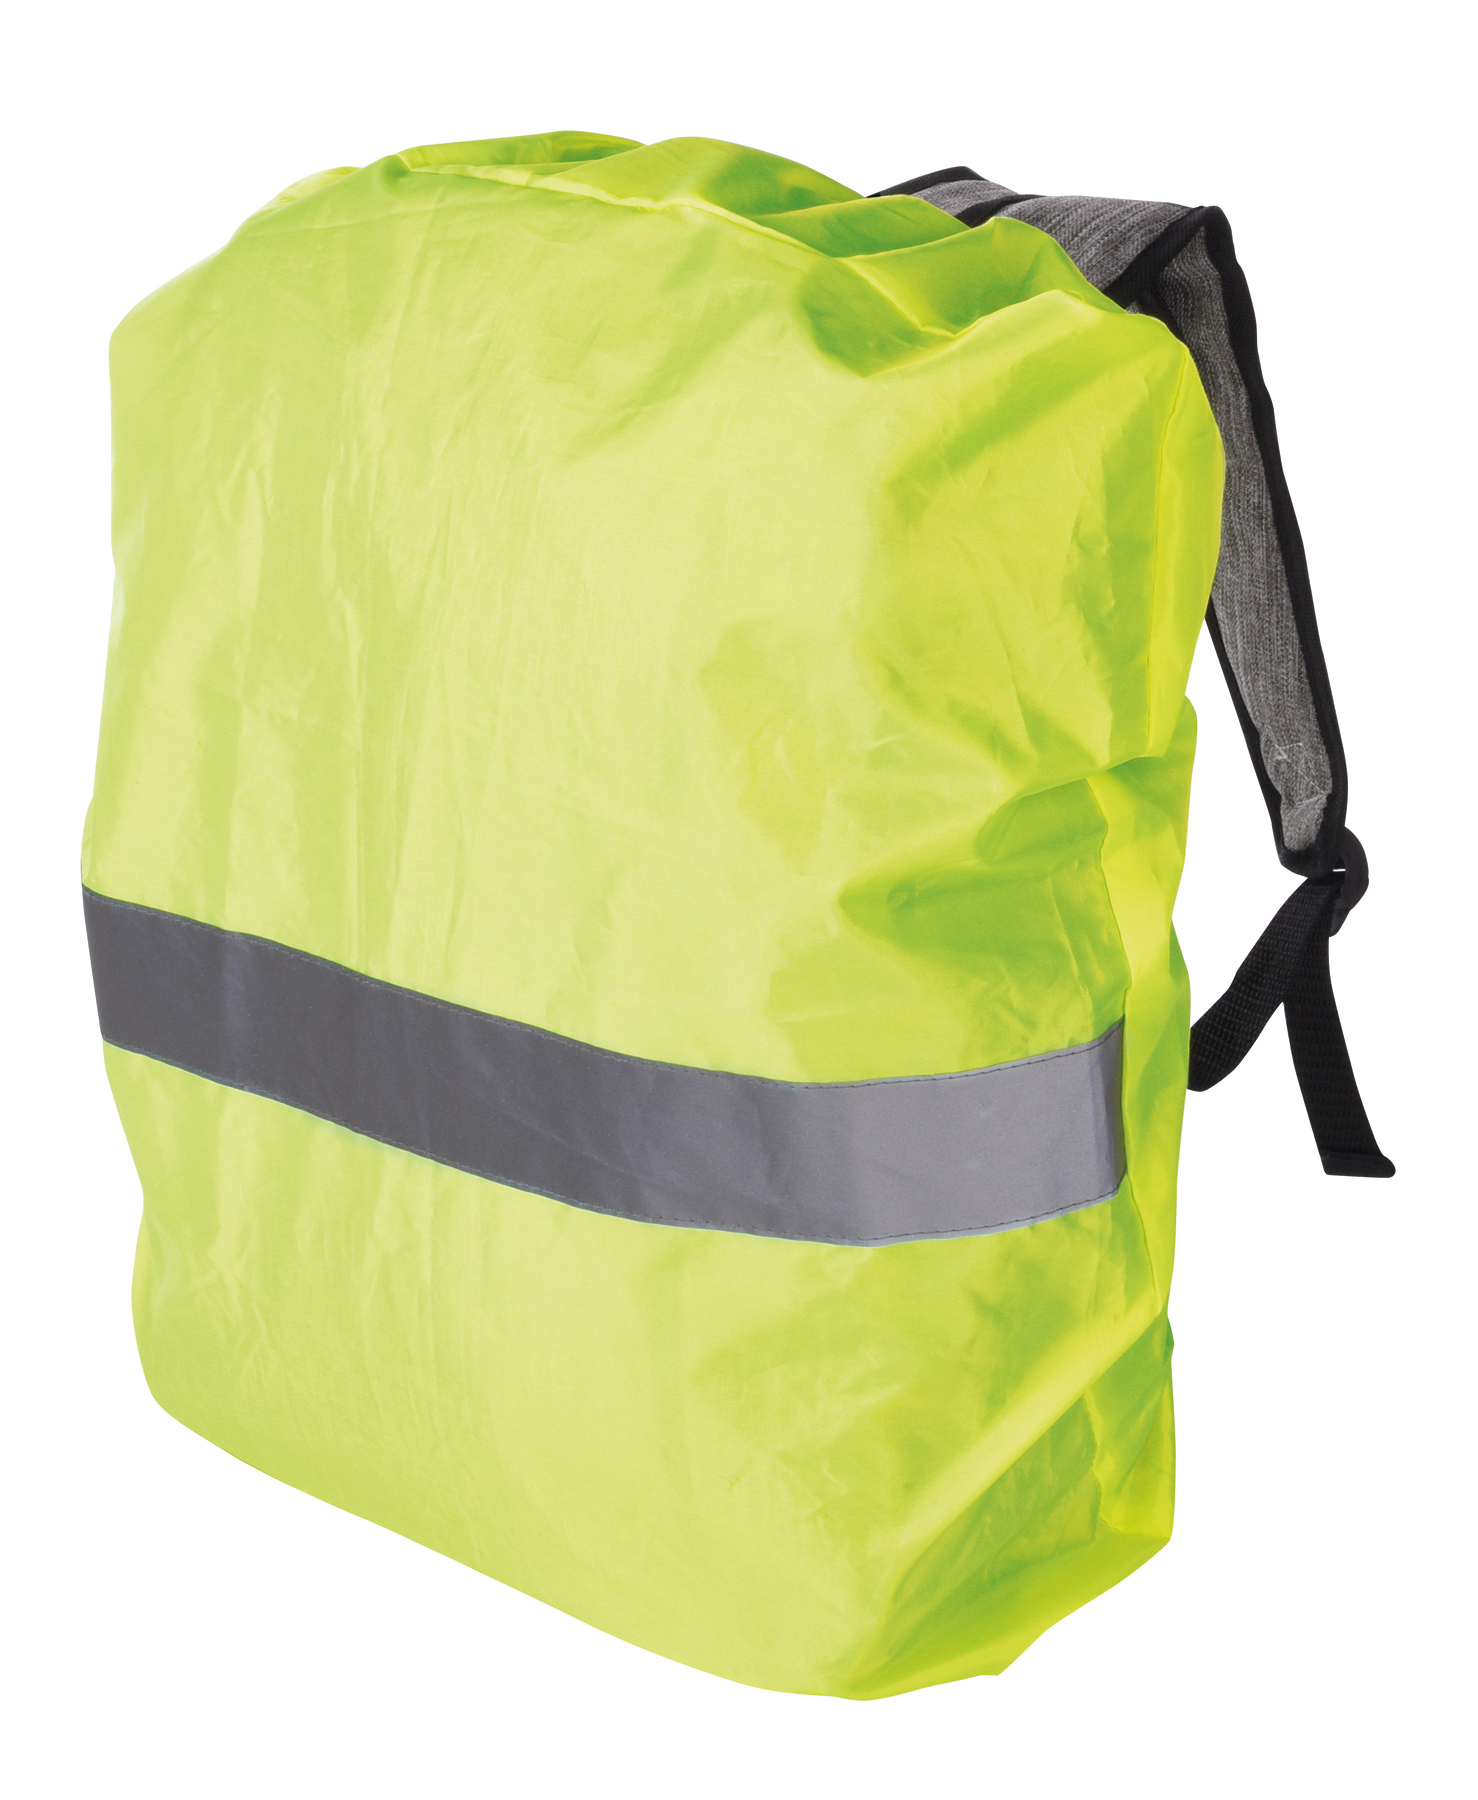 Rain protector for backpacks and school bag RAINY DAYS - yellow